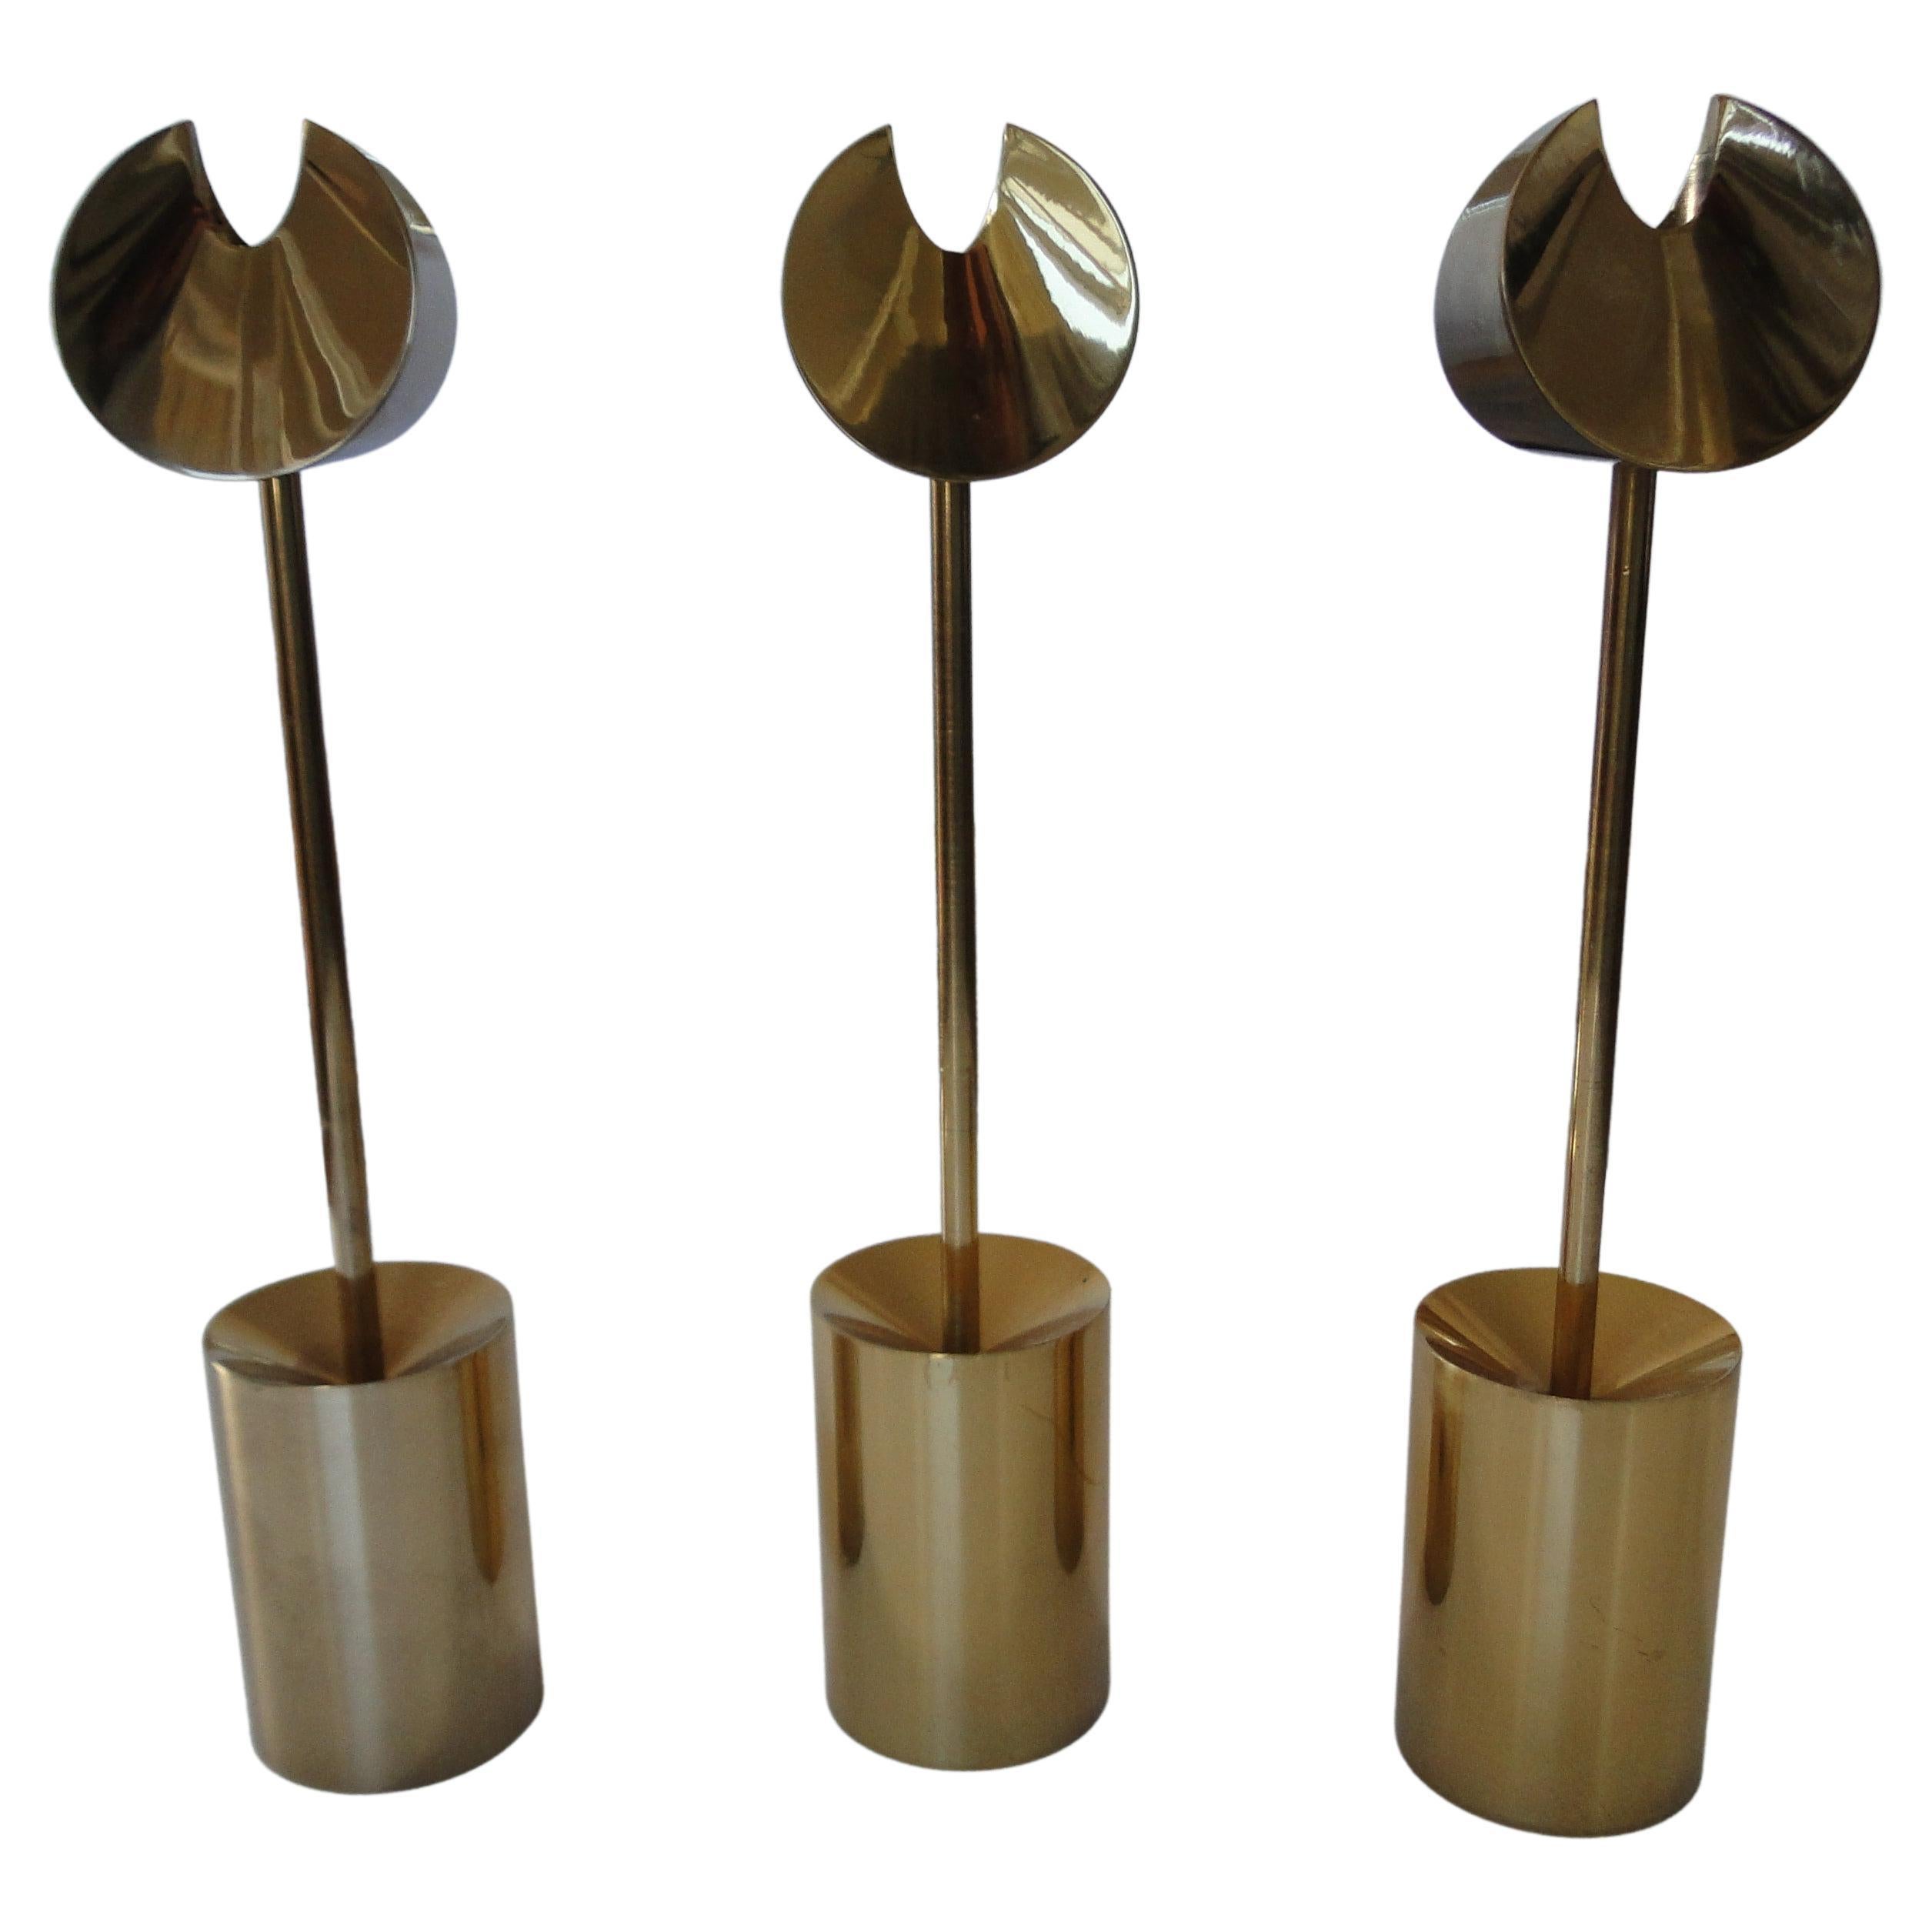 Pierre Forssell 3 Candlesticks in Brass Produced by Skultuna in Sweden